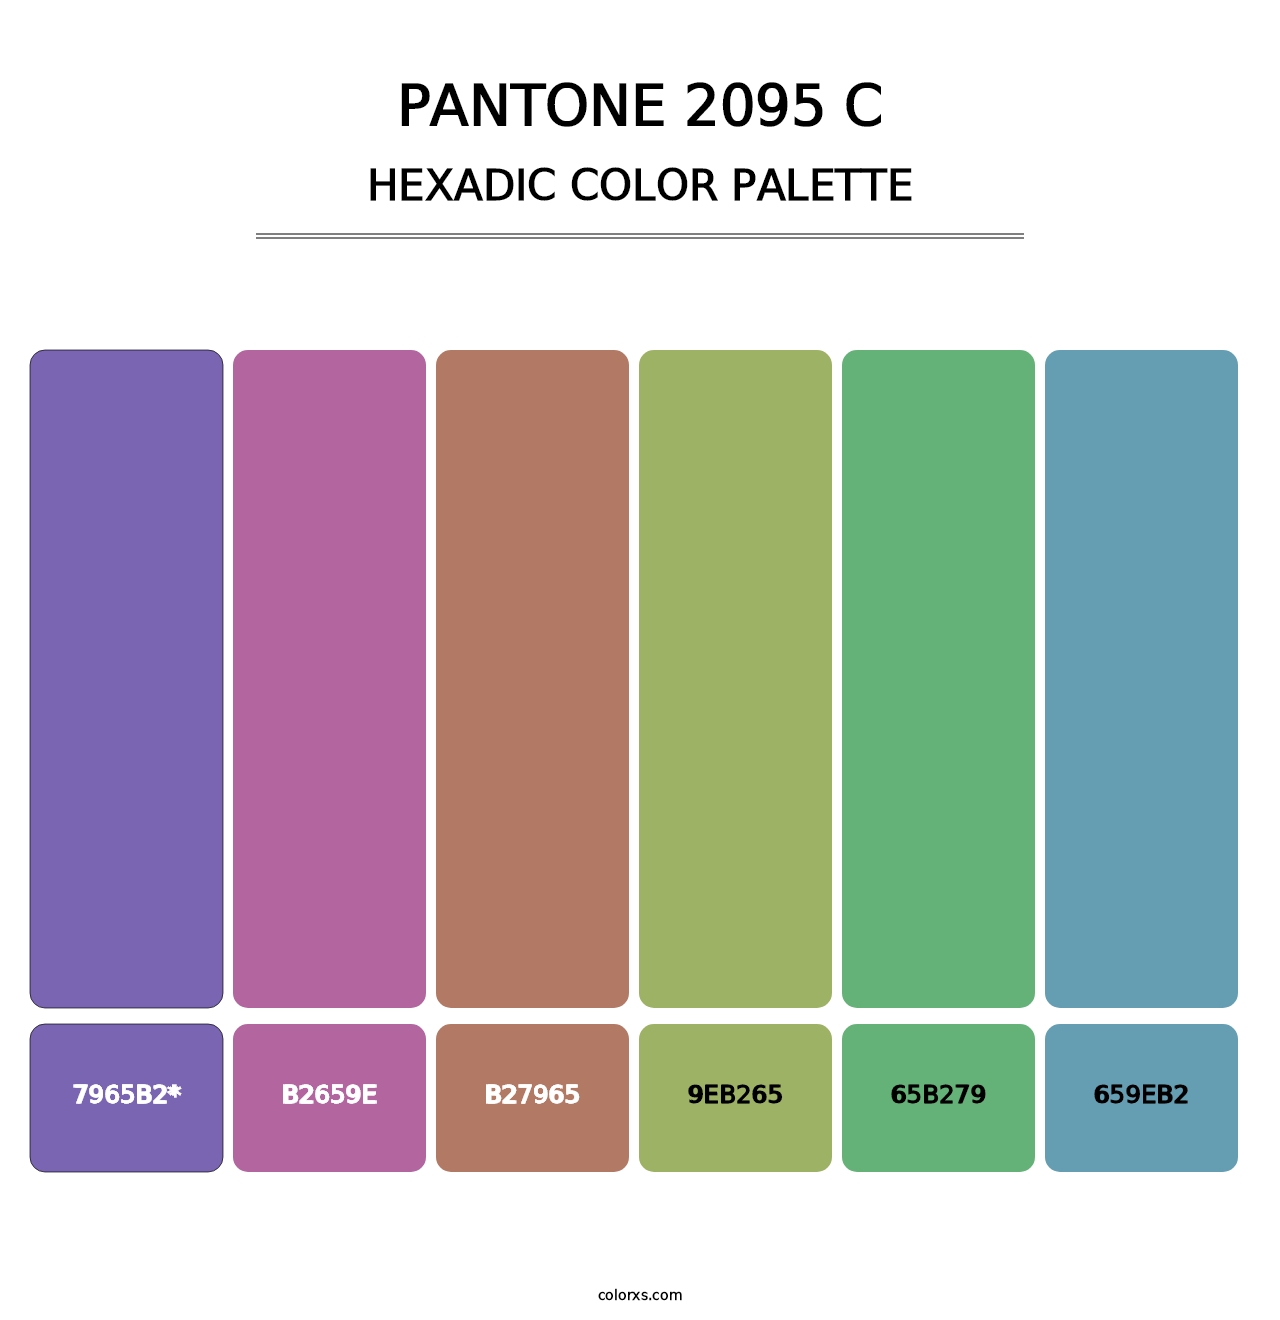 PANTONE 2095 C - Hexadic Color Palette